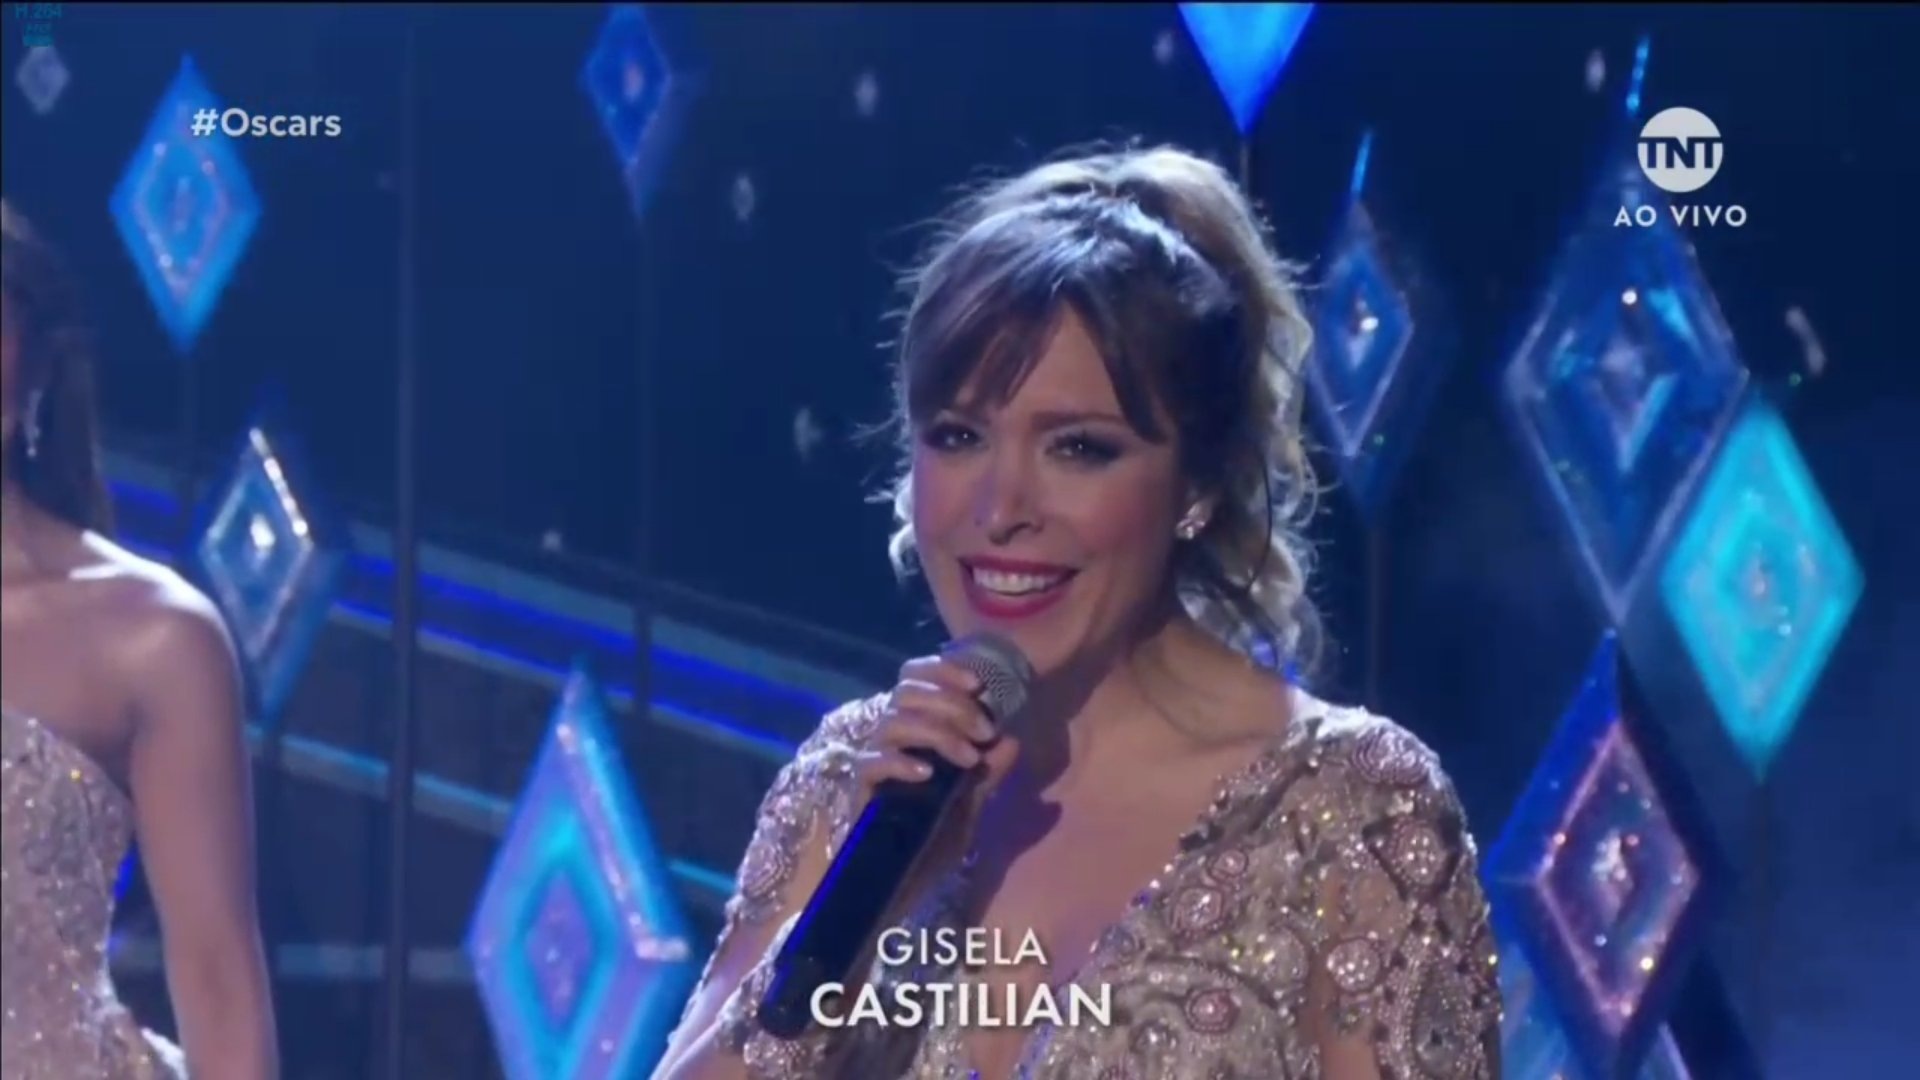 Polémica lingüística en los Oscar: Gisela canta en "castellano" y Carmen Sarahí en "español" 1